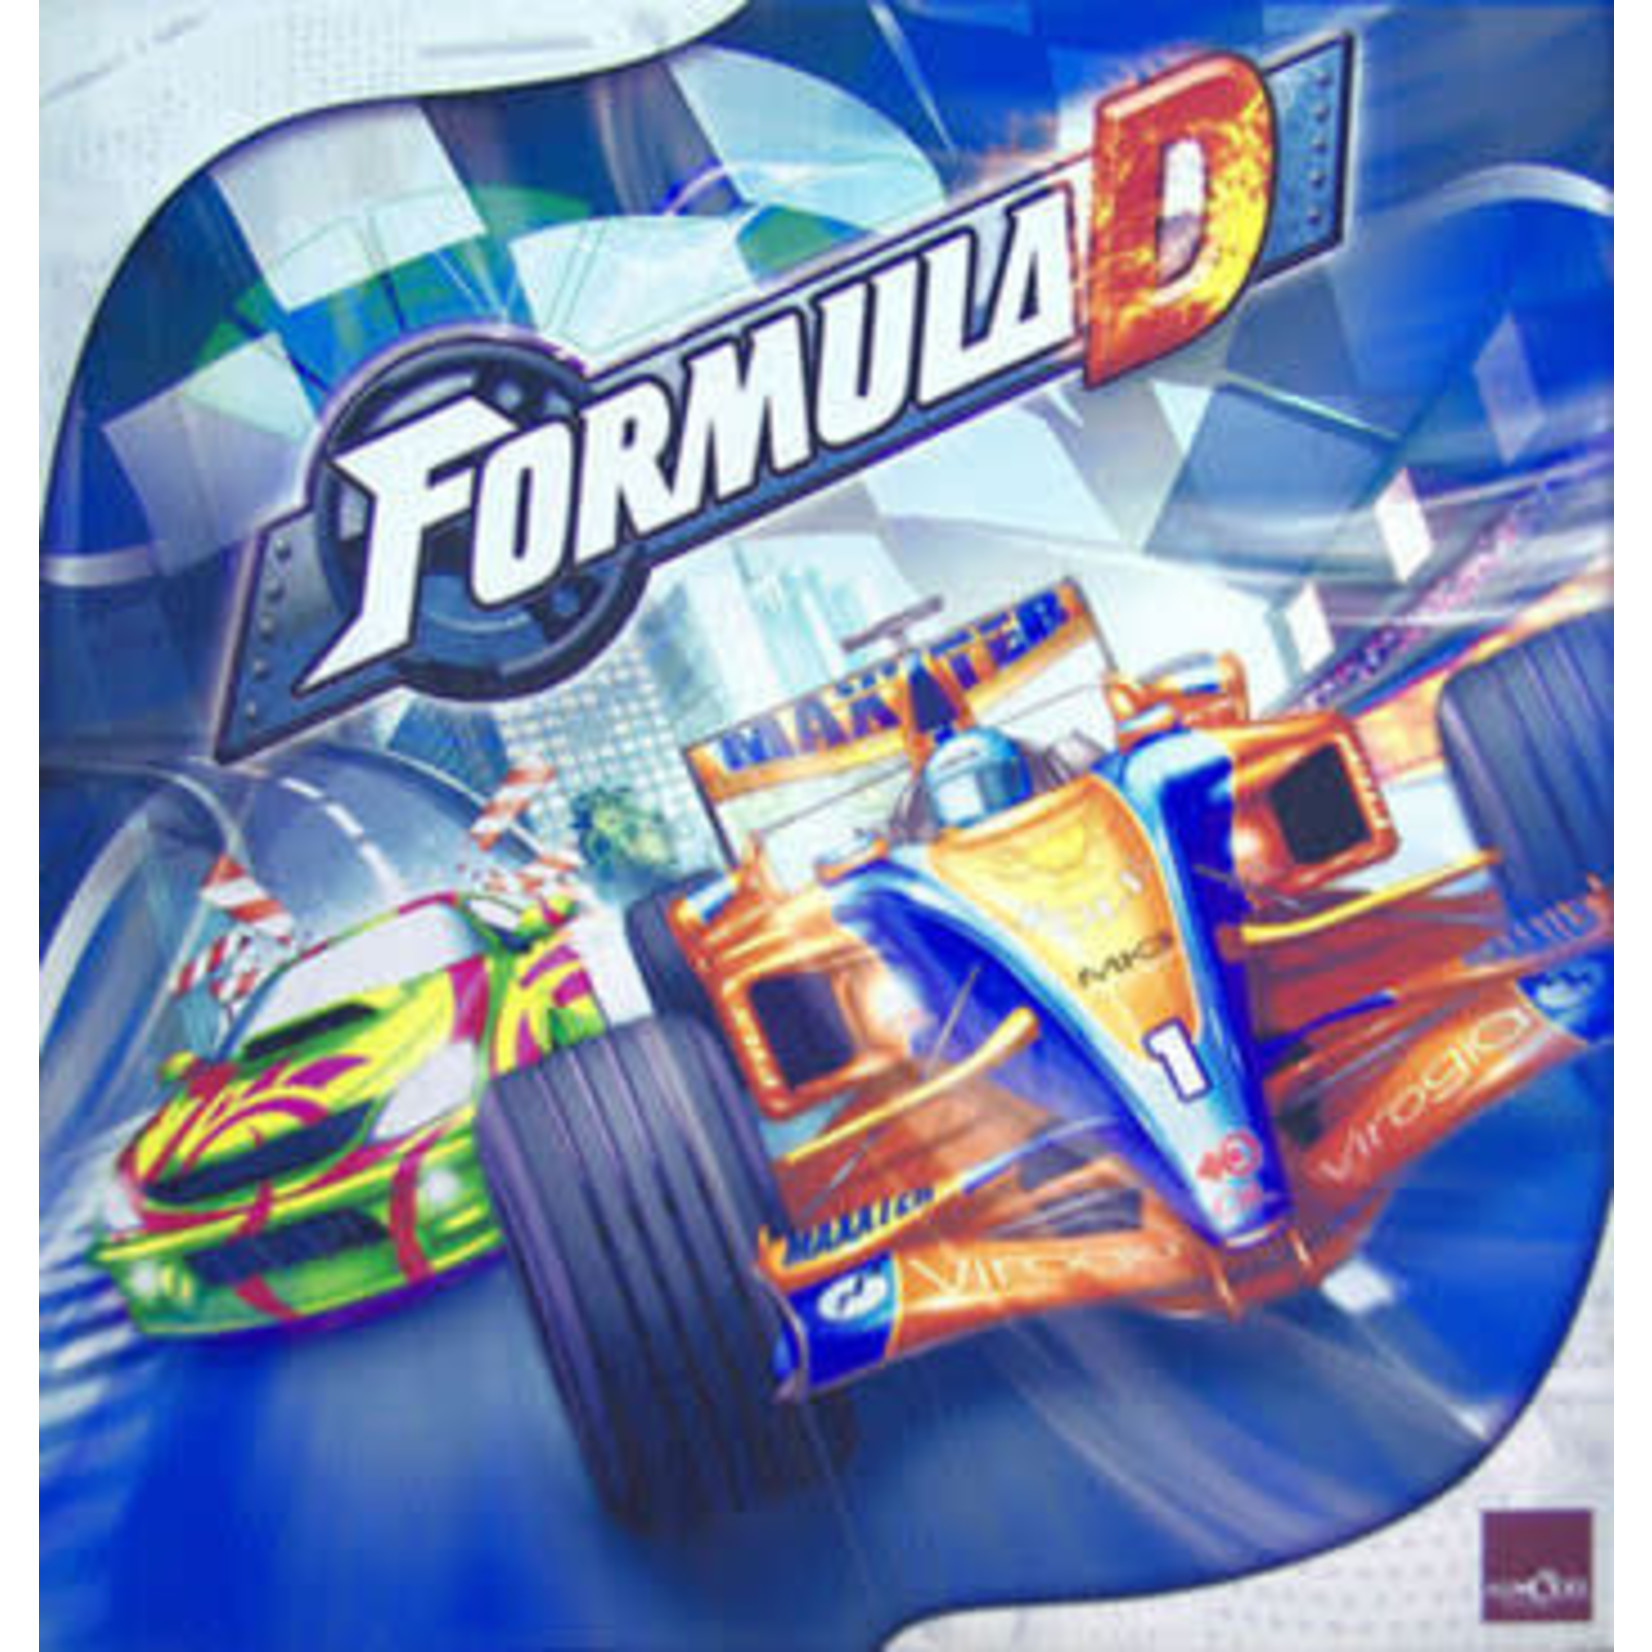 Formula D Board Game